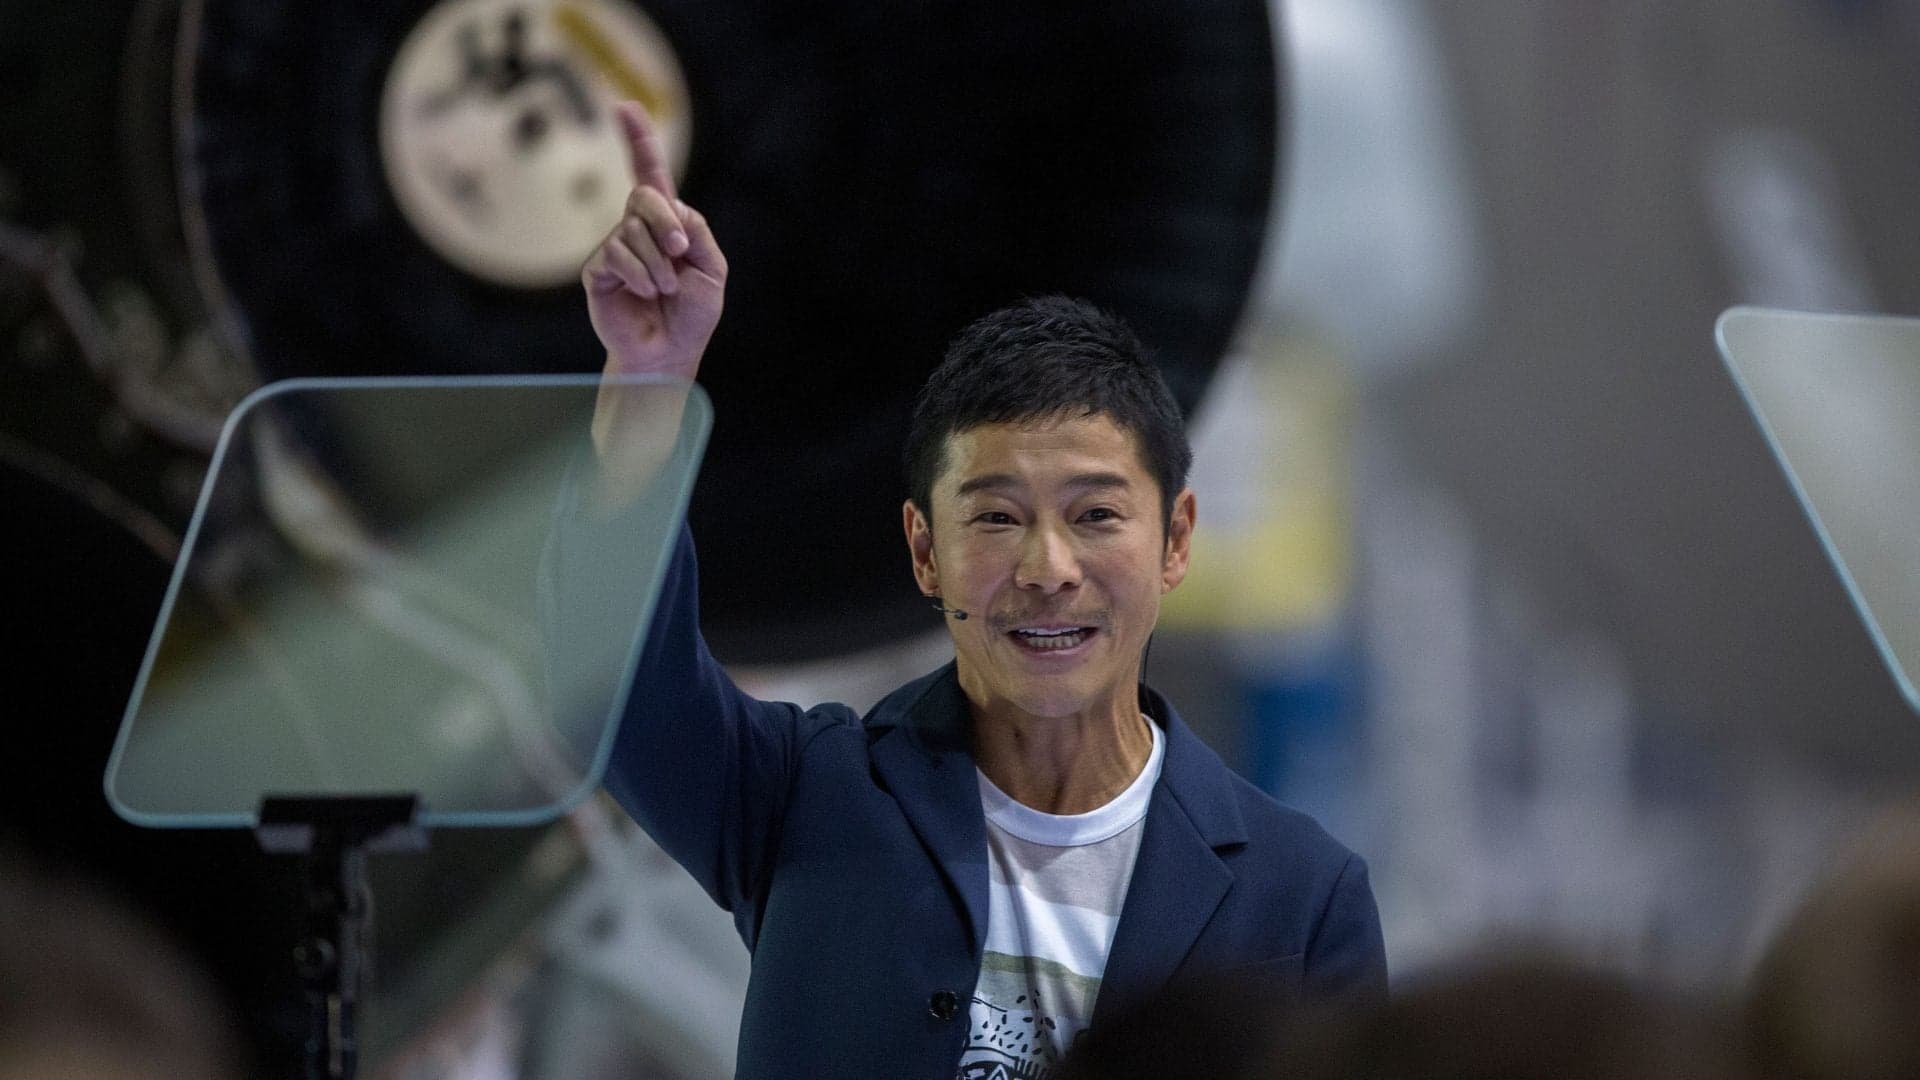 Japanese Billionaire Yusaku Maezawa Identified as SpaceX Moon Passenger